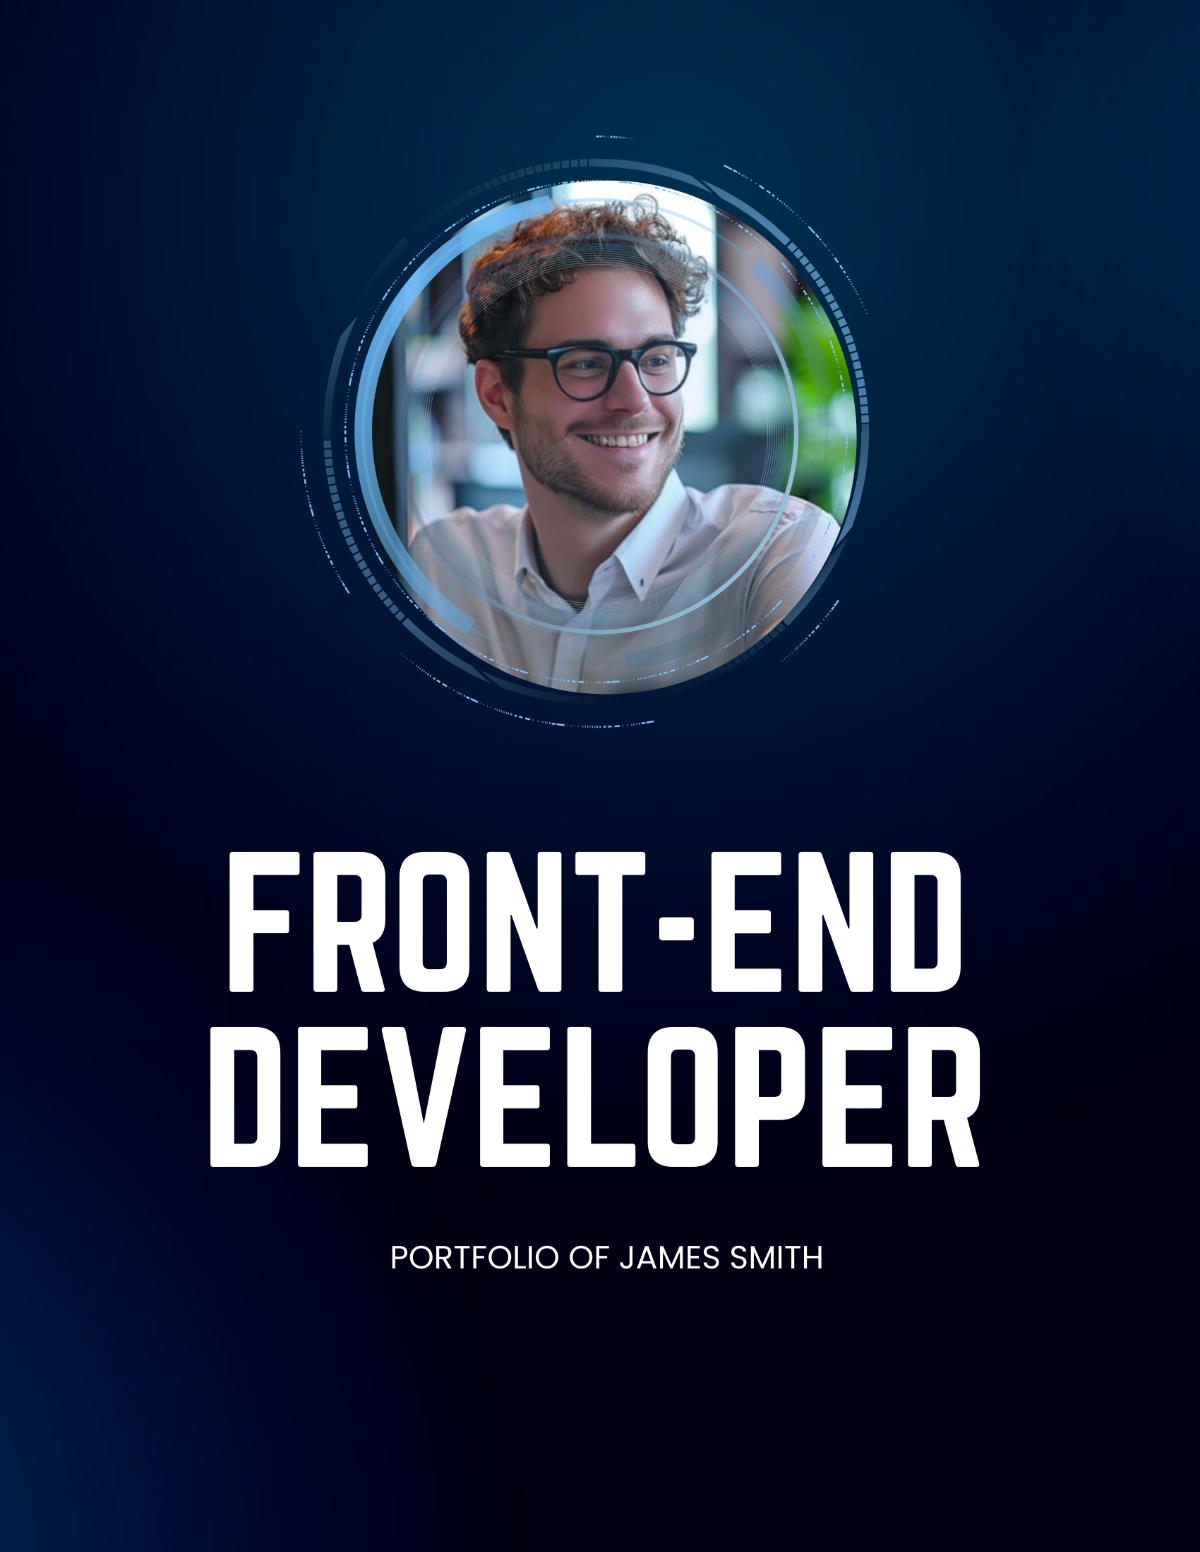 Front End Developer Portfolio